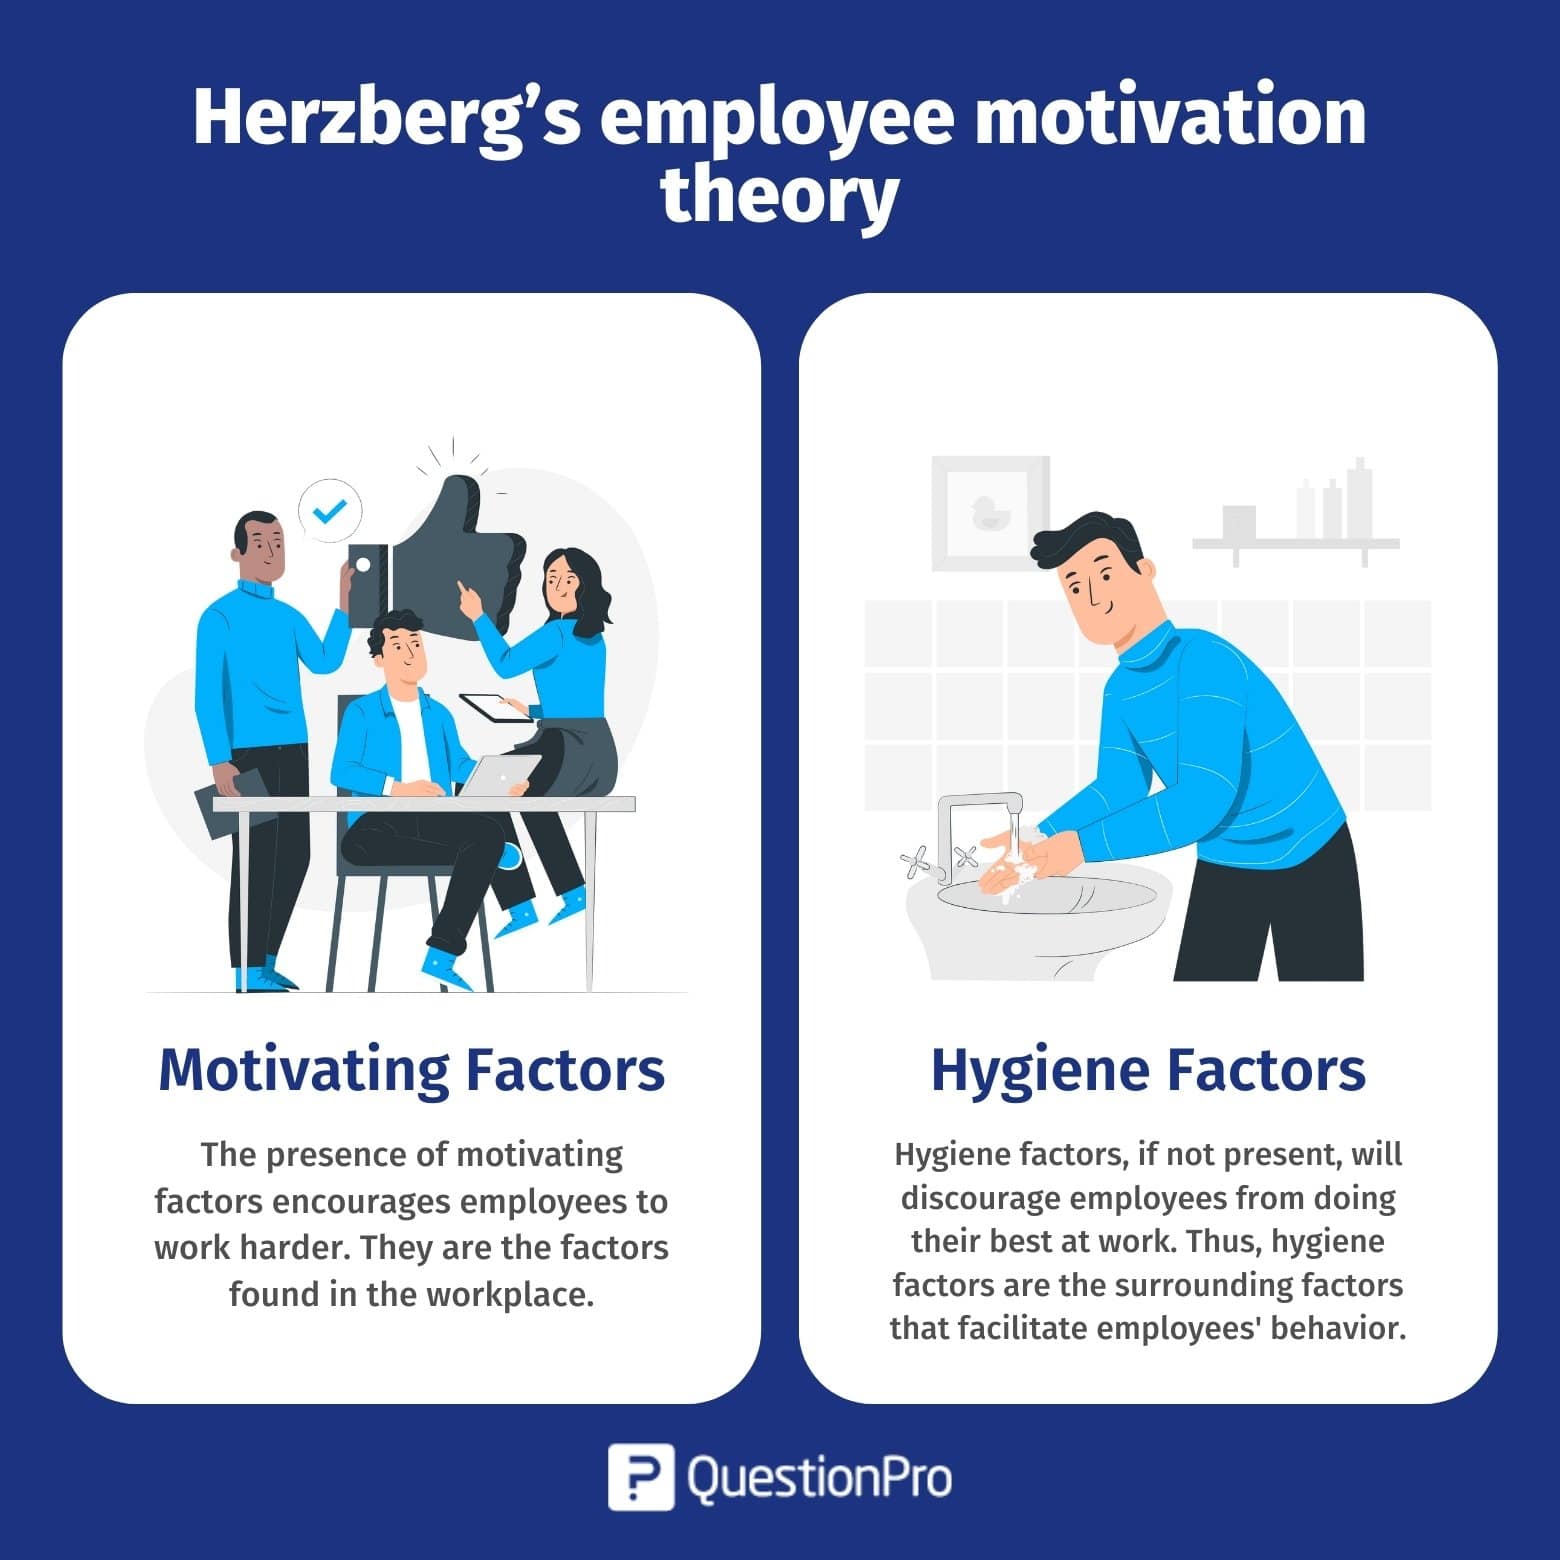 a case study of employee motivation